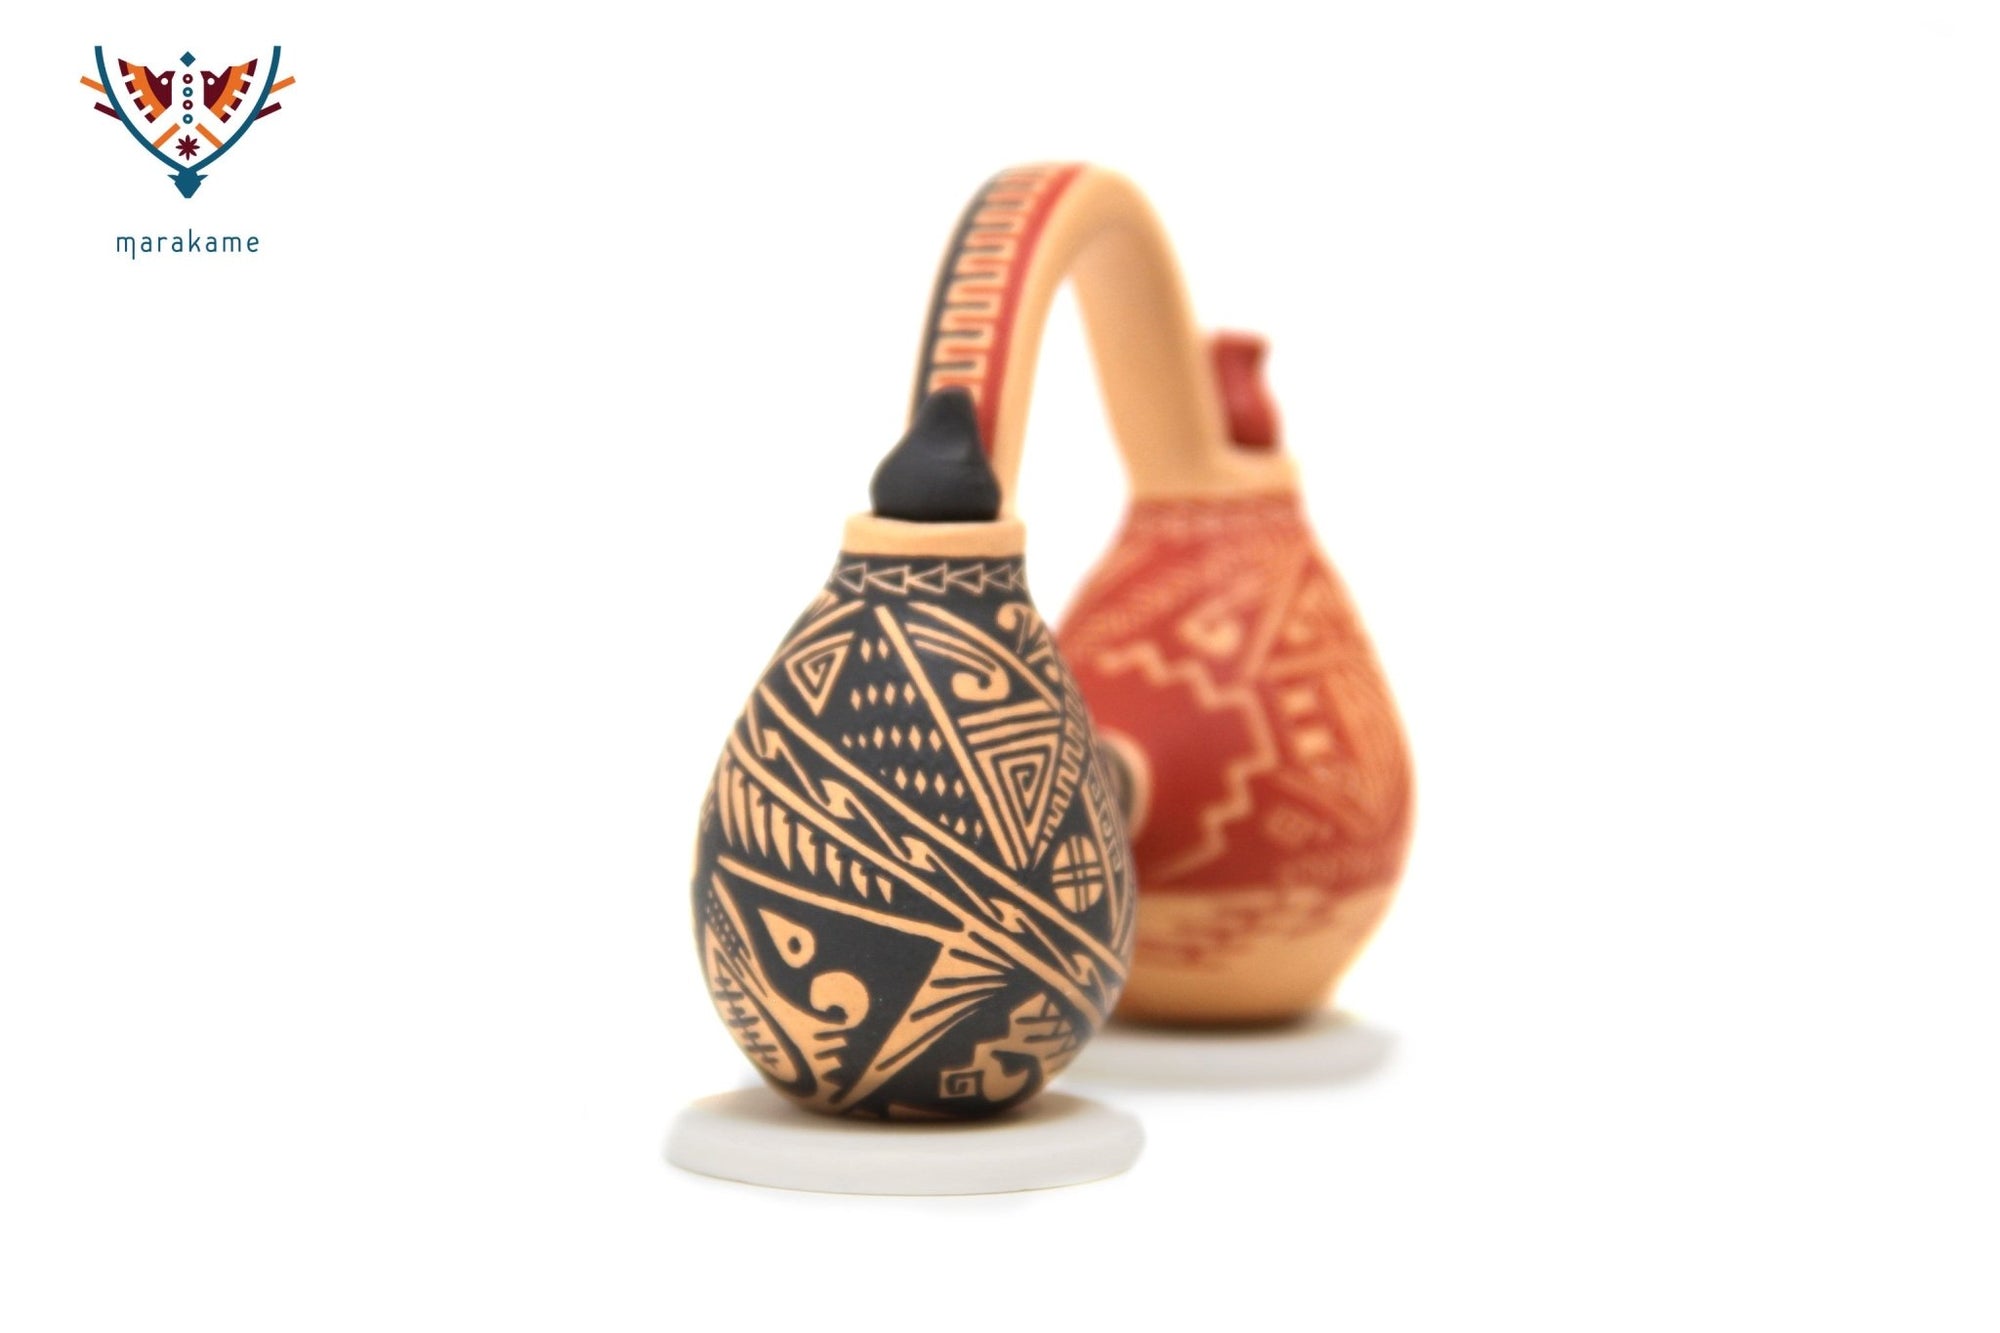 Mata Ortiz Ceramics - Miniature - Connected Vases - Huichol Art - Marakame